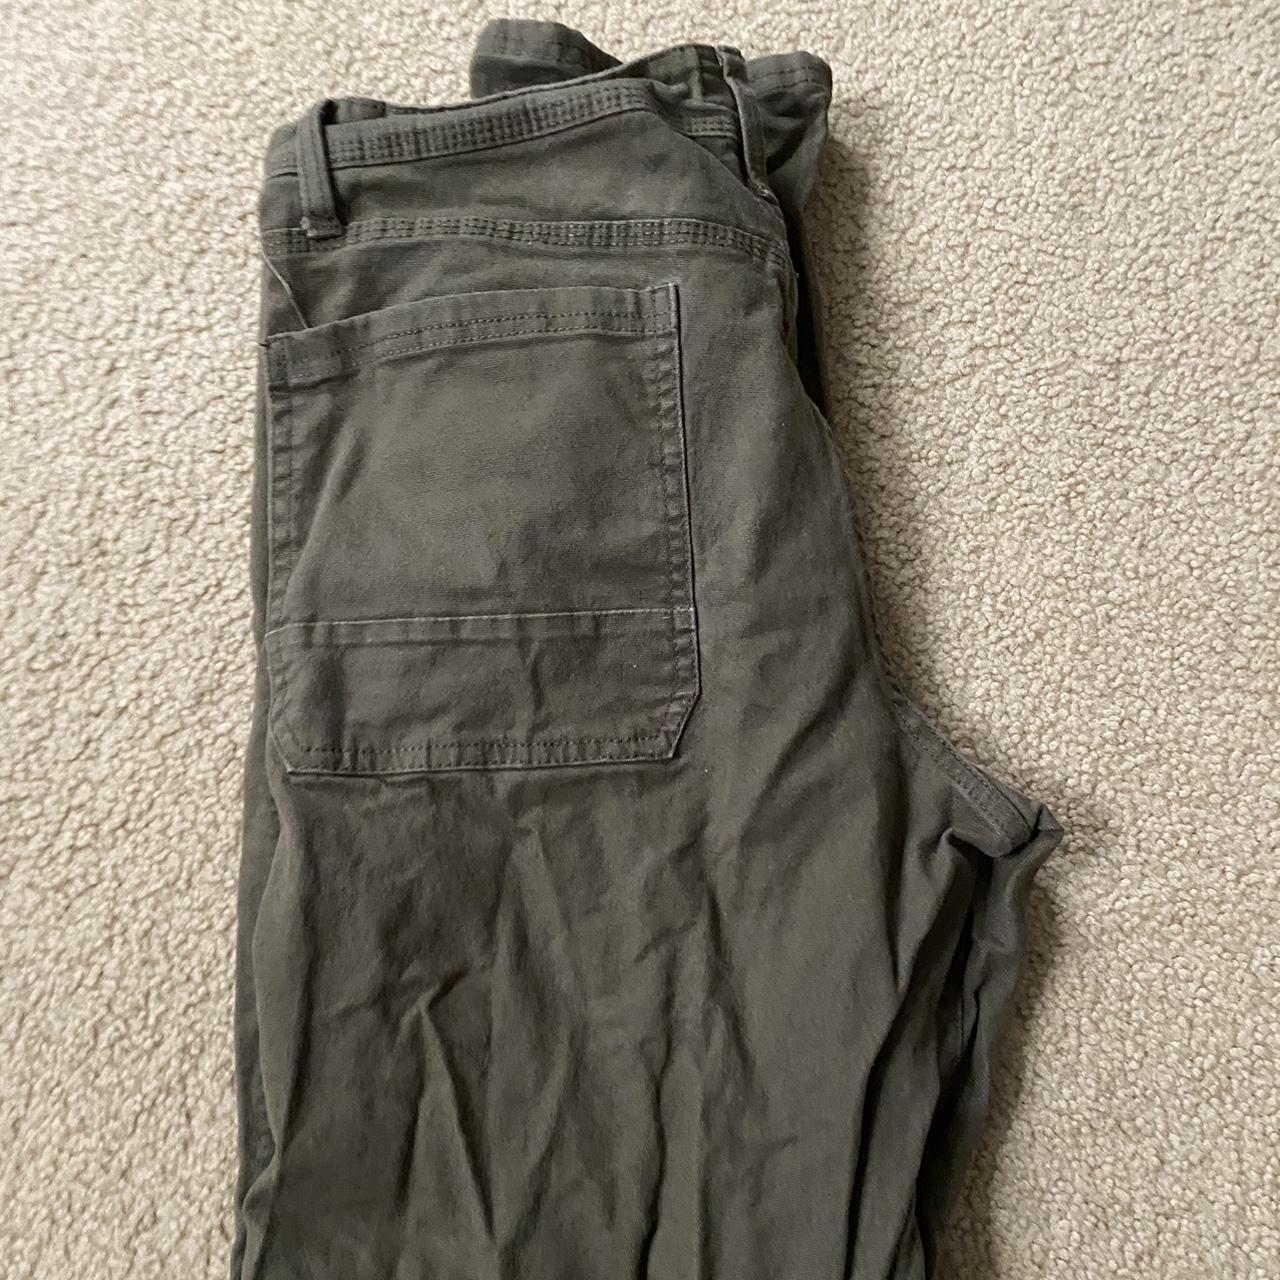 WeatherProof vintage pants size 32x34 Very durable